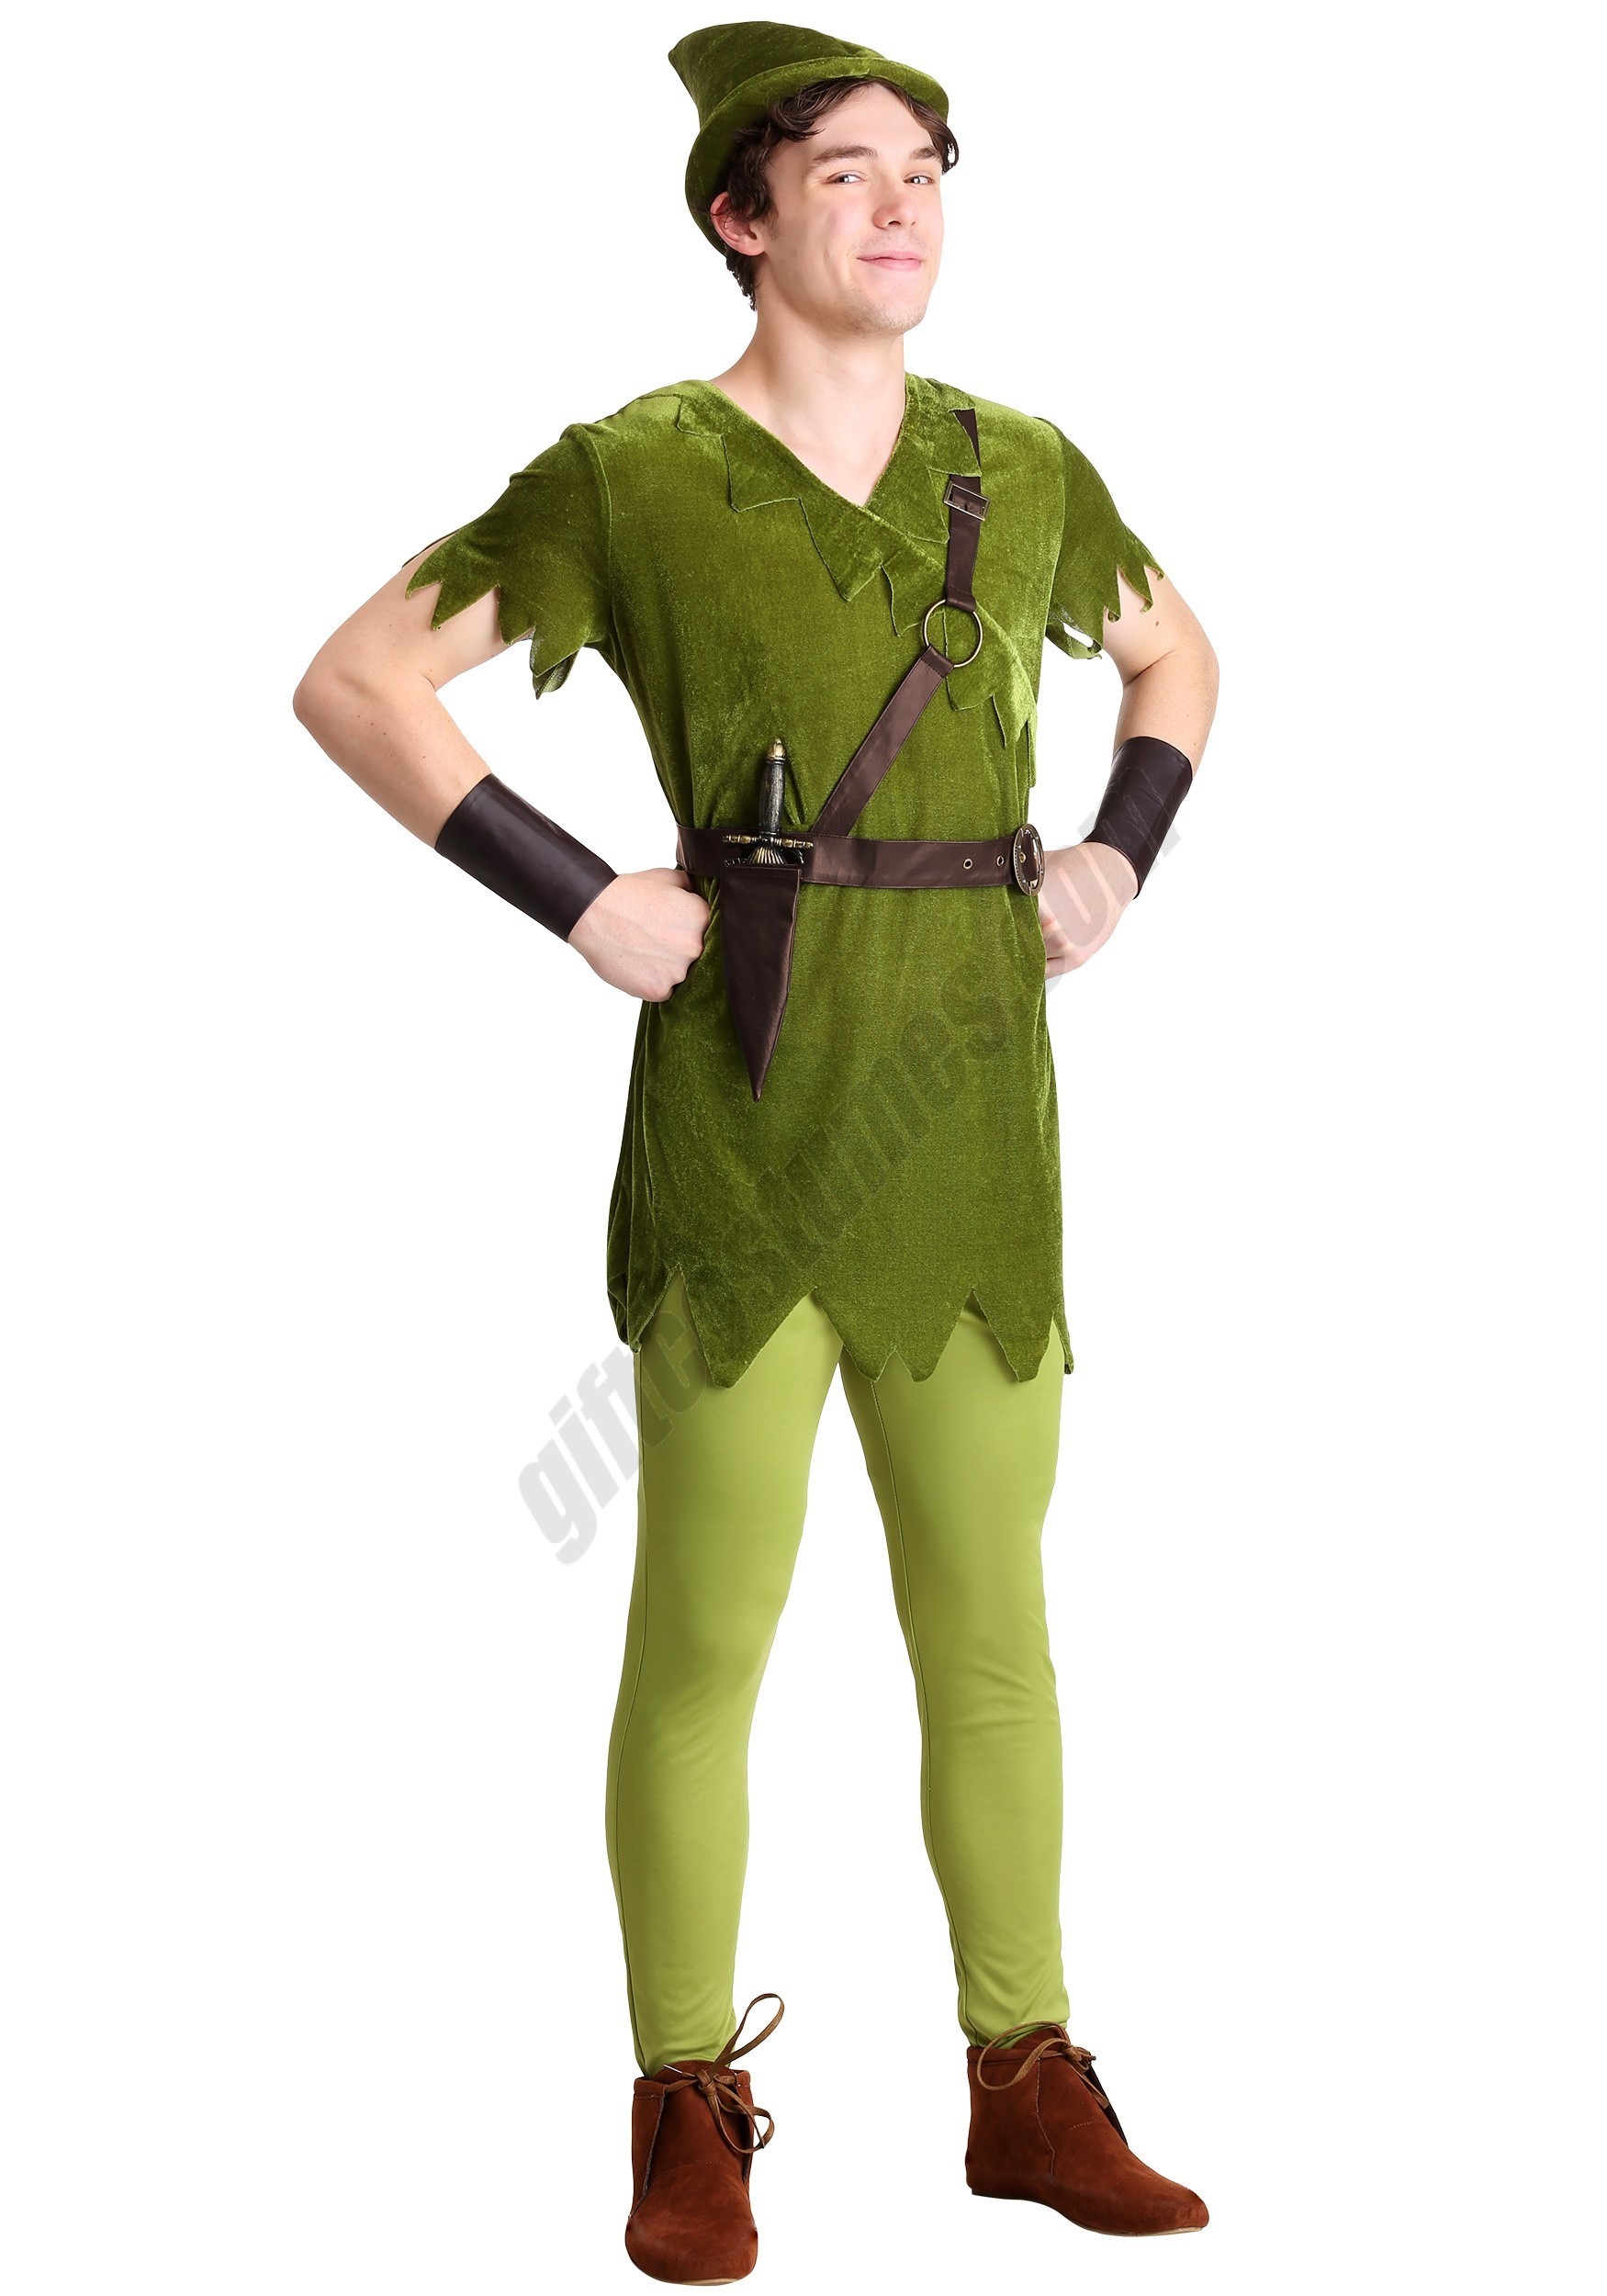 Adult Classic Peter Pan Costume - Men's - Adult Classic Peter Pan Costume - Men's